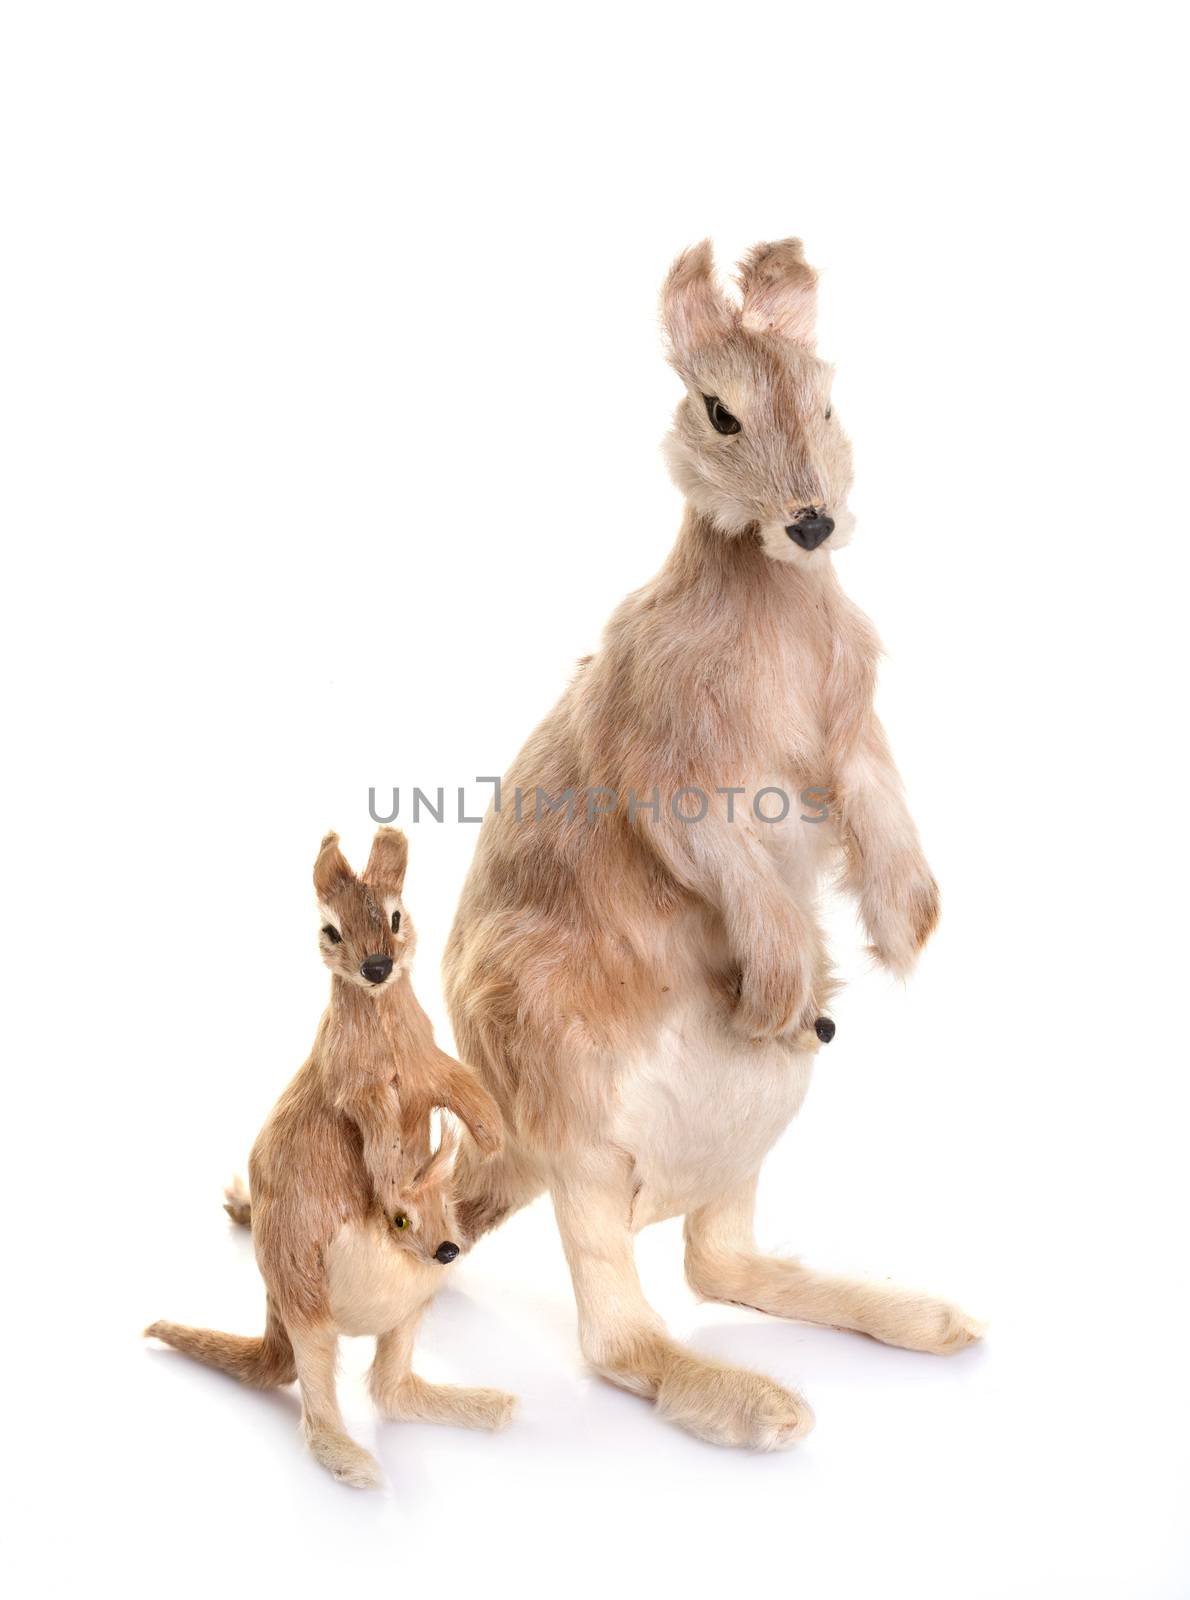 trinket kangaroo in studio by cynoclub